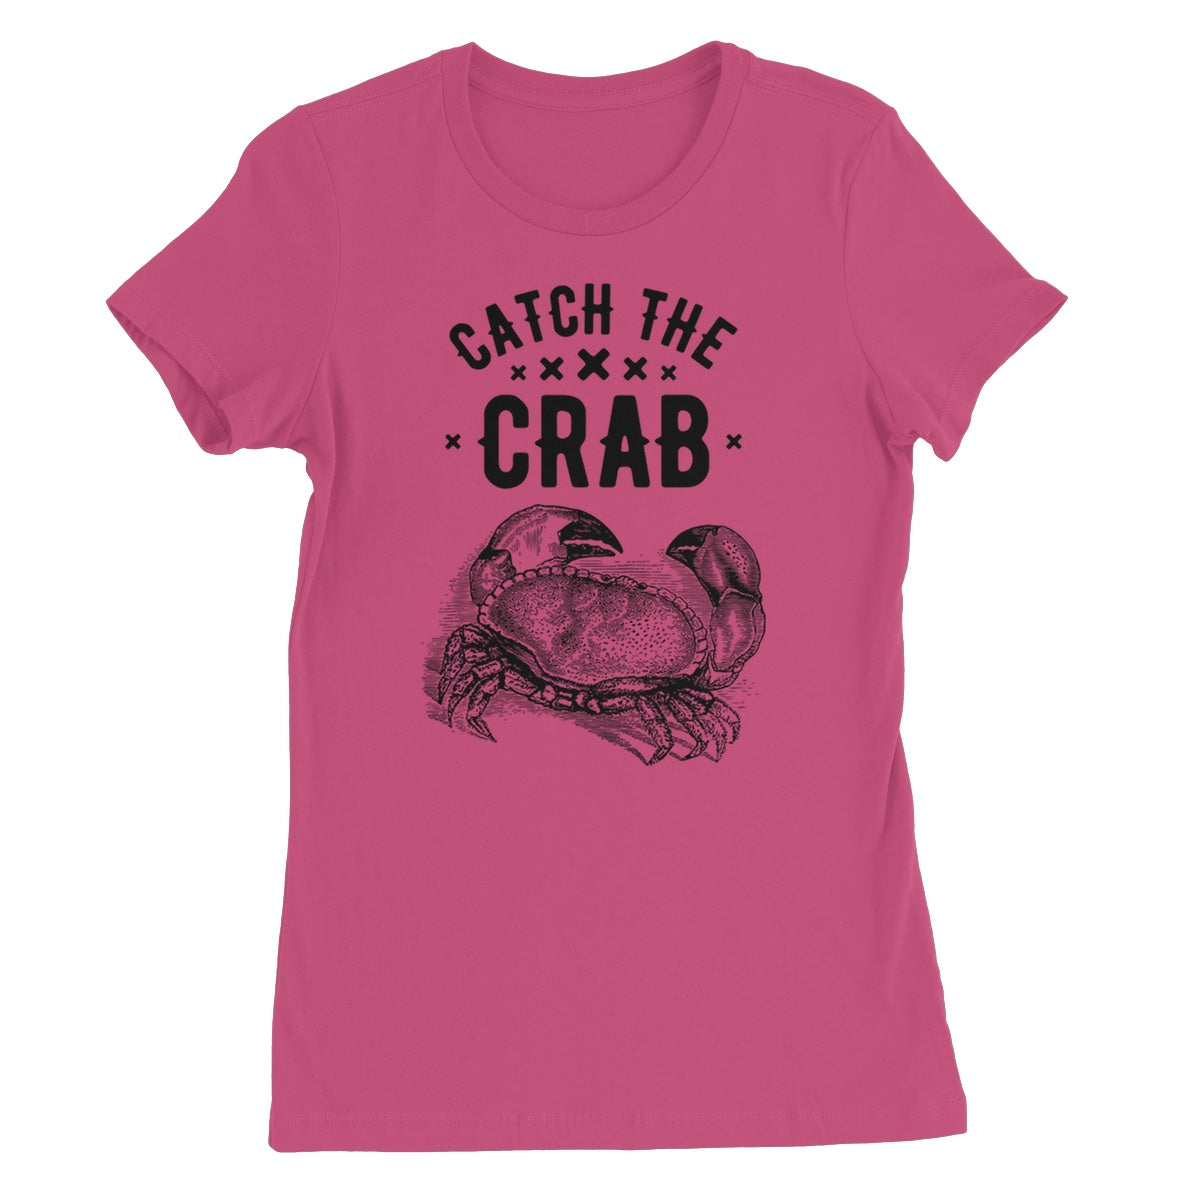 AQUA B&W - 07 - Catch the crab - Women's Fine Jersey T-Shirt